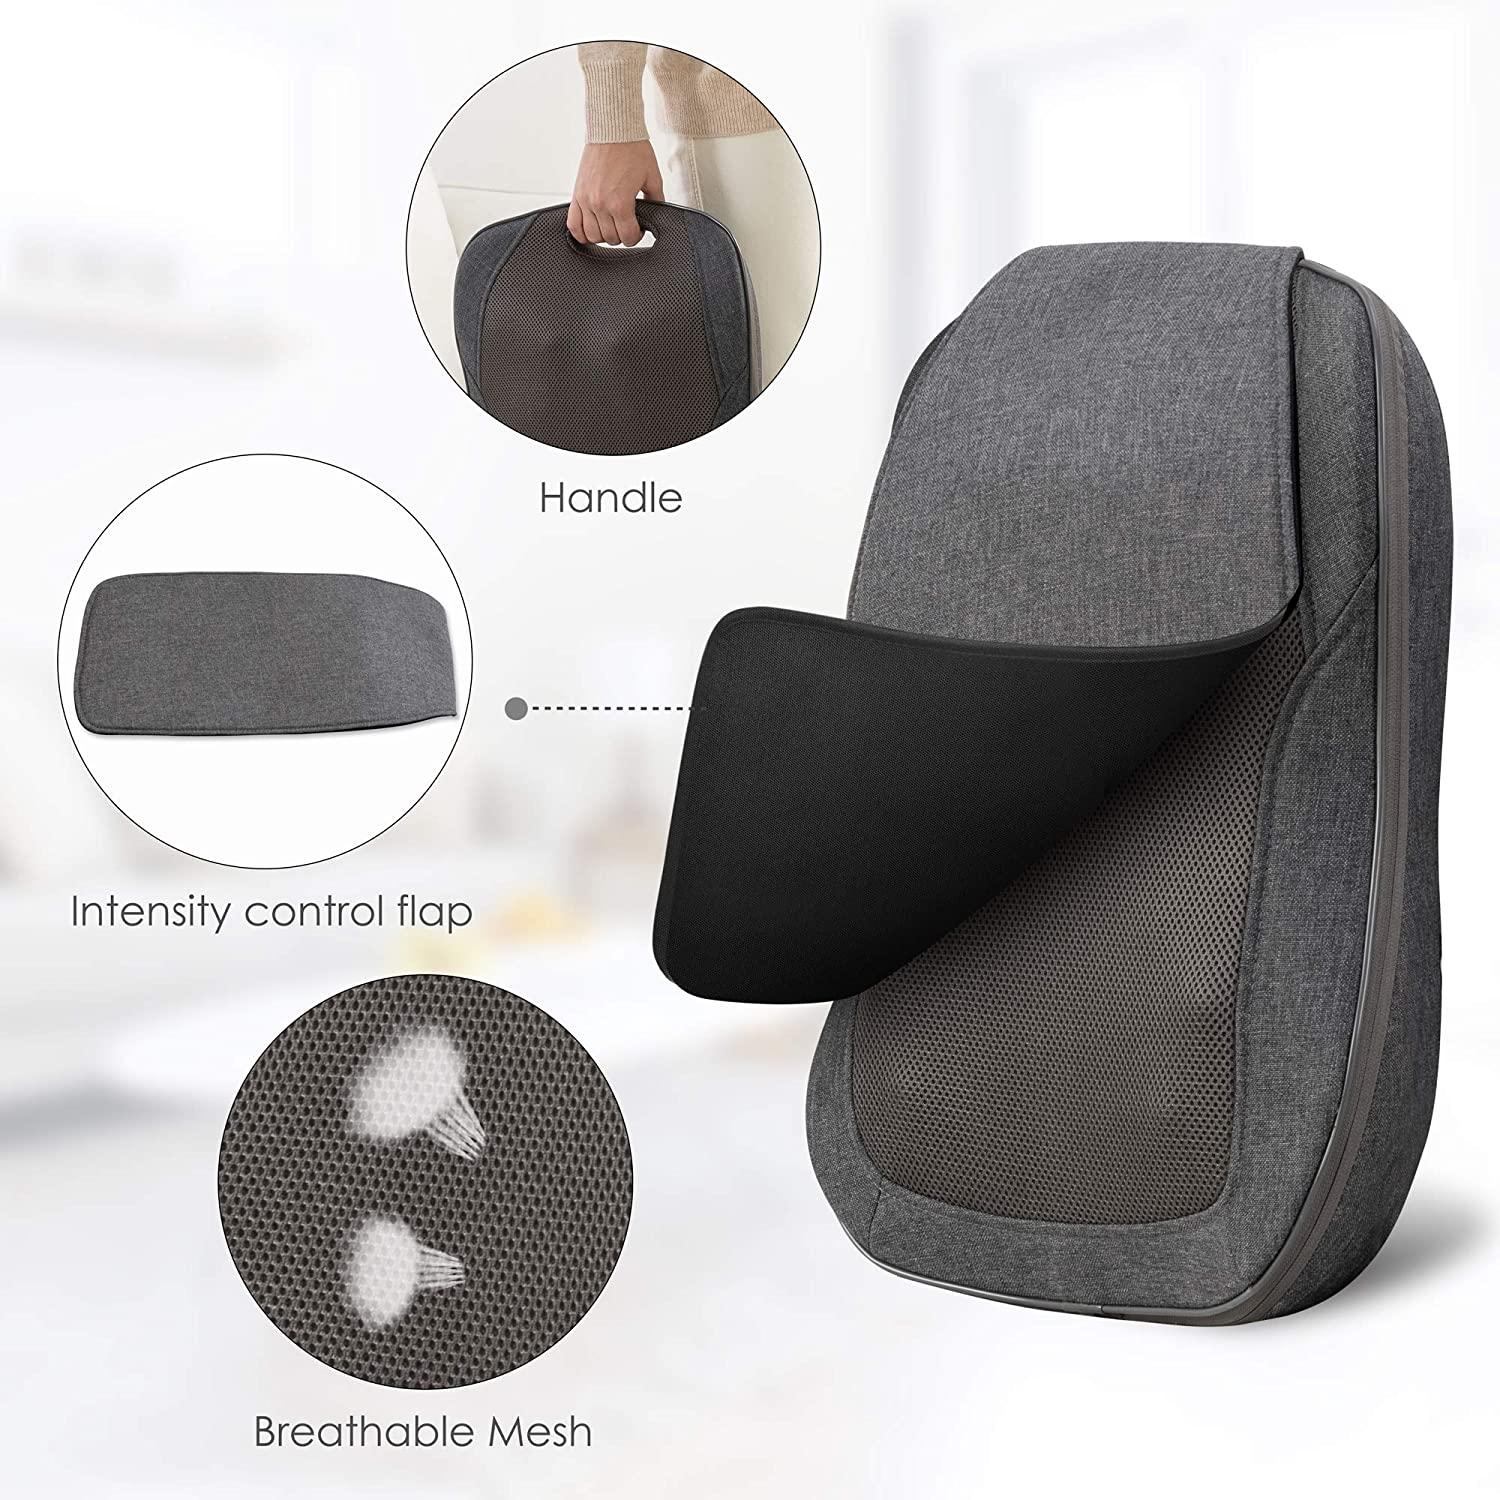 Comfier Back Massager with Heat,Shiatsu Massage Chair Pad,Deep Kneading  Massage Seat Cushion for Home,Office 